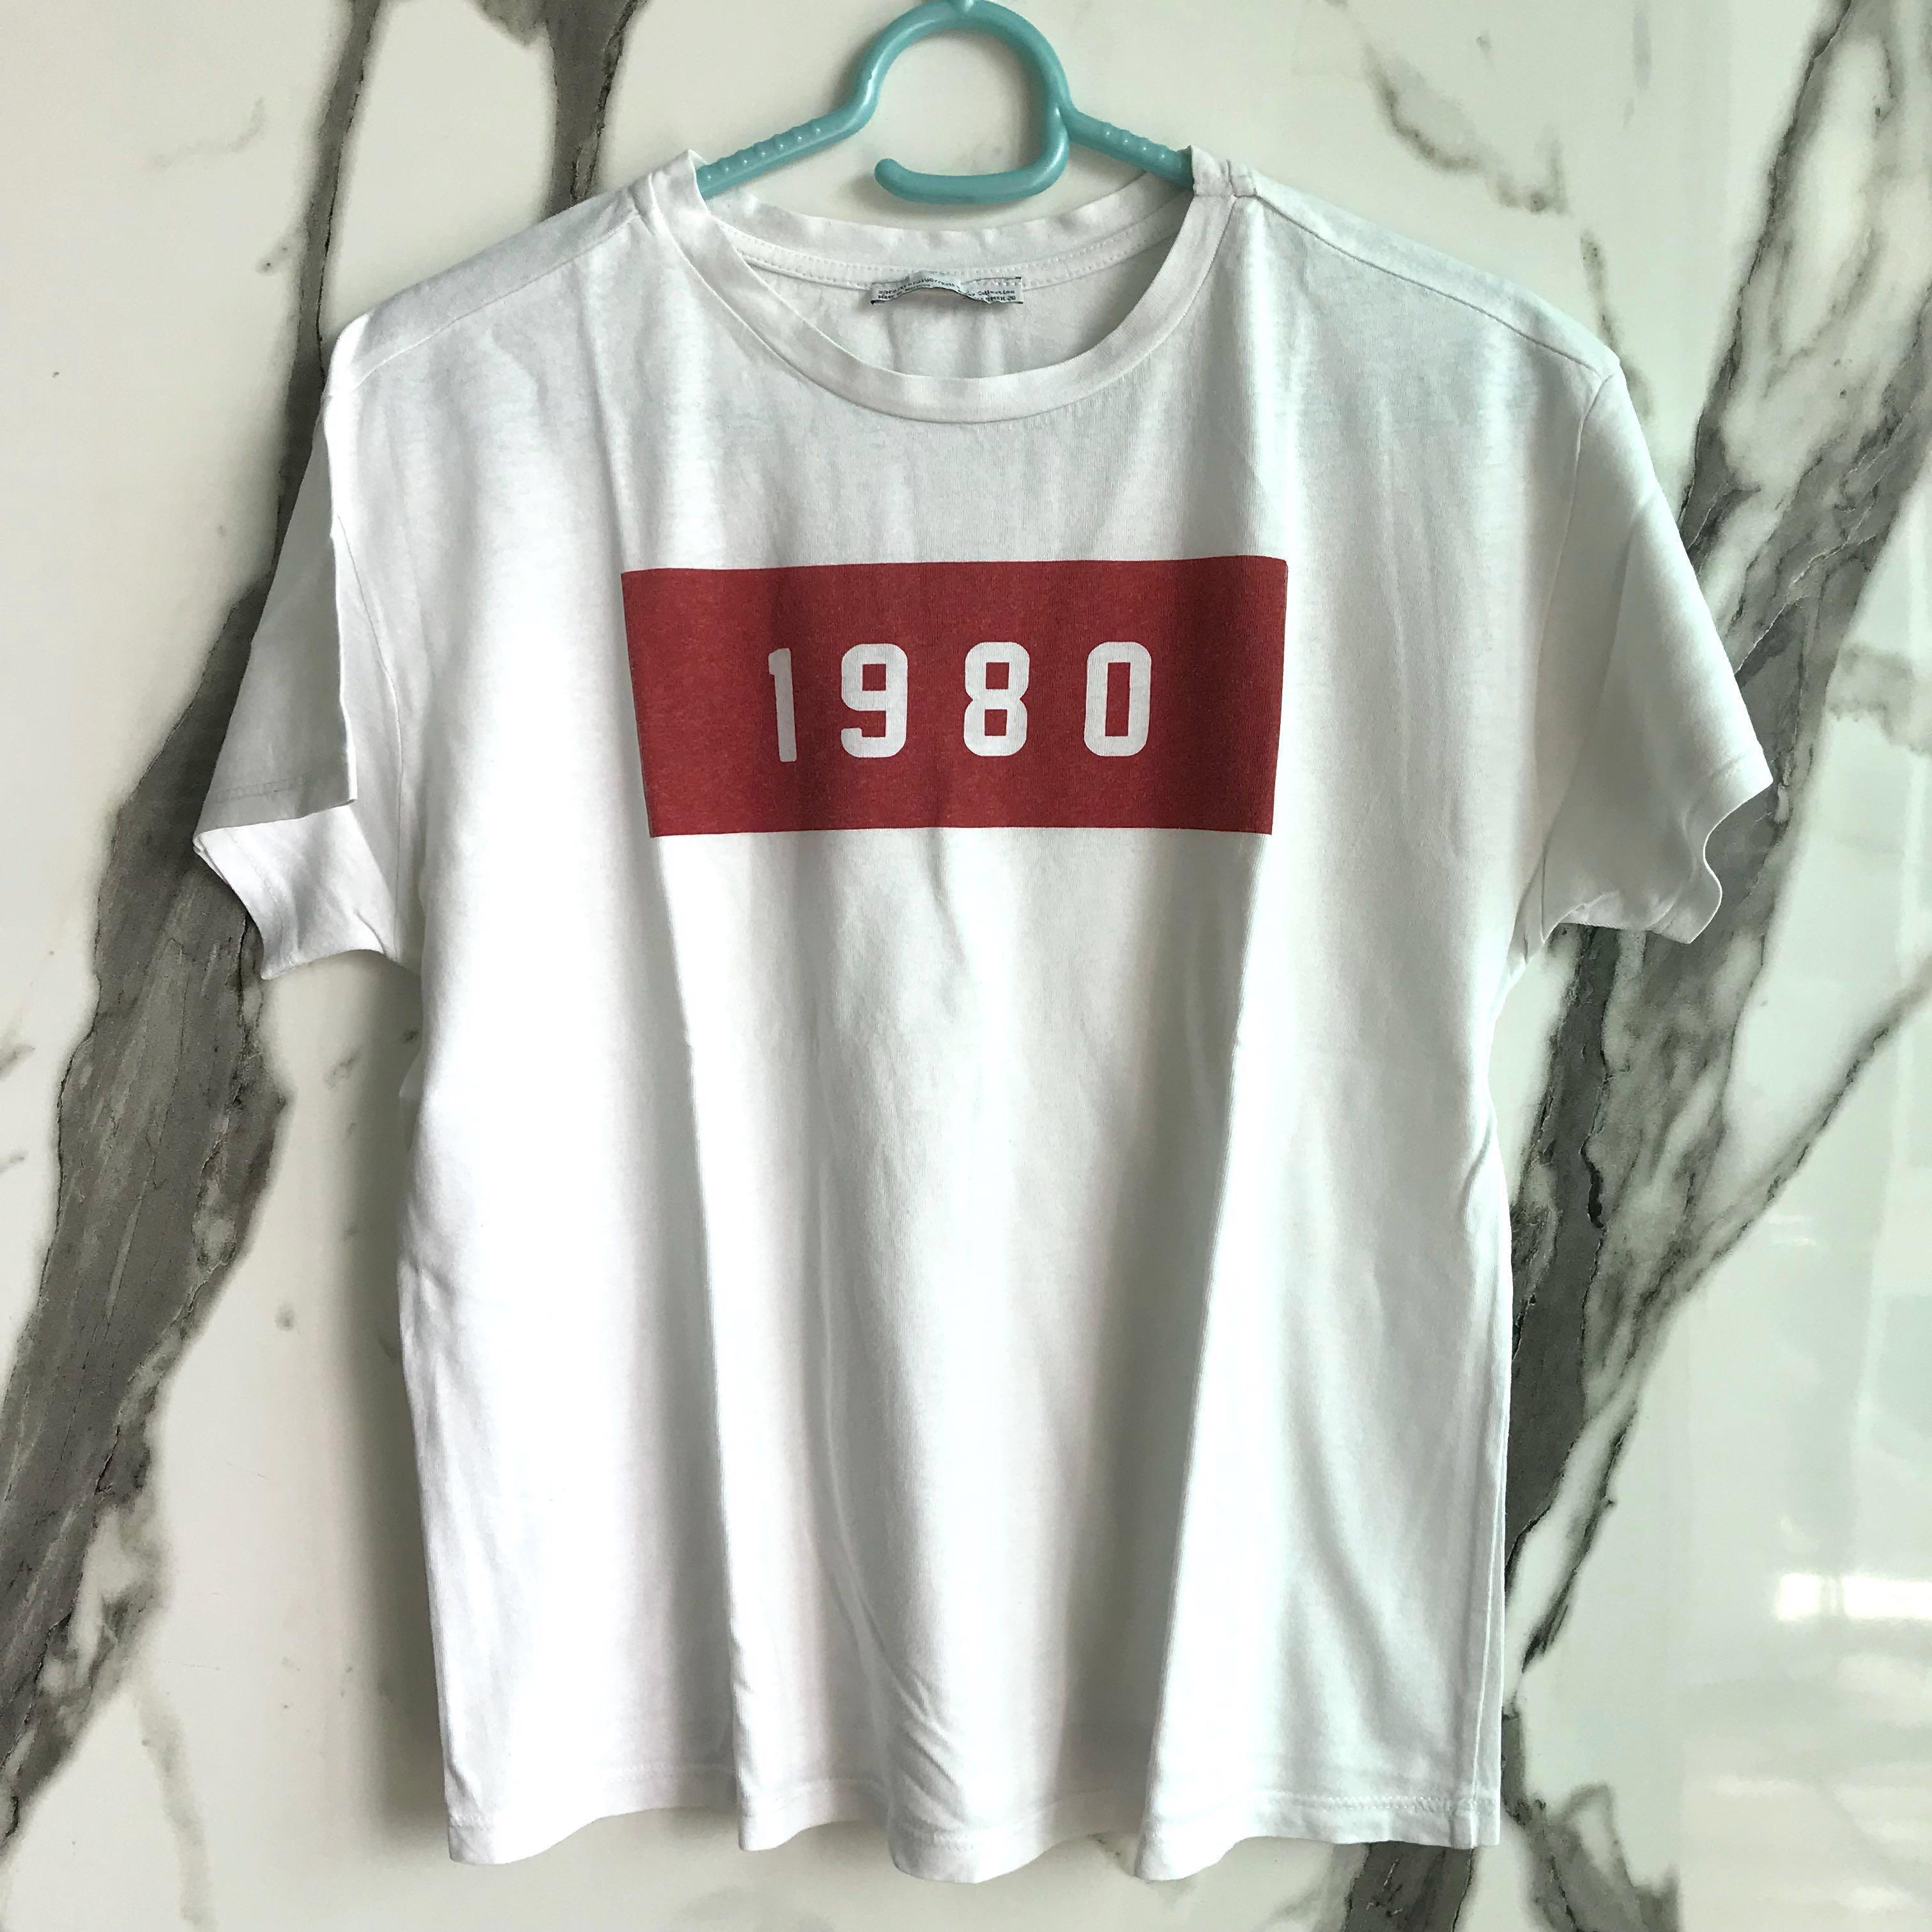 1980 t shirt zara